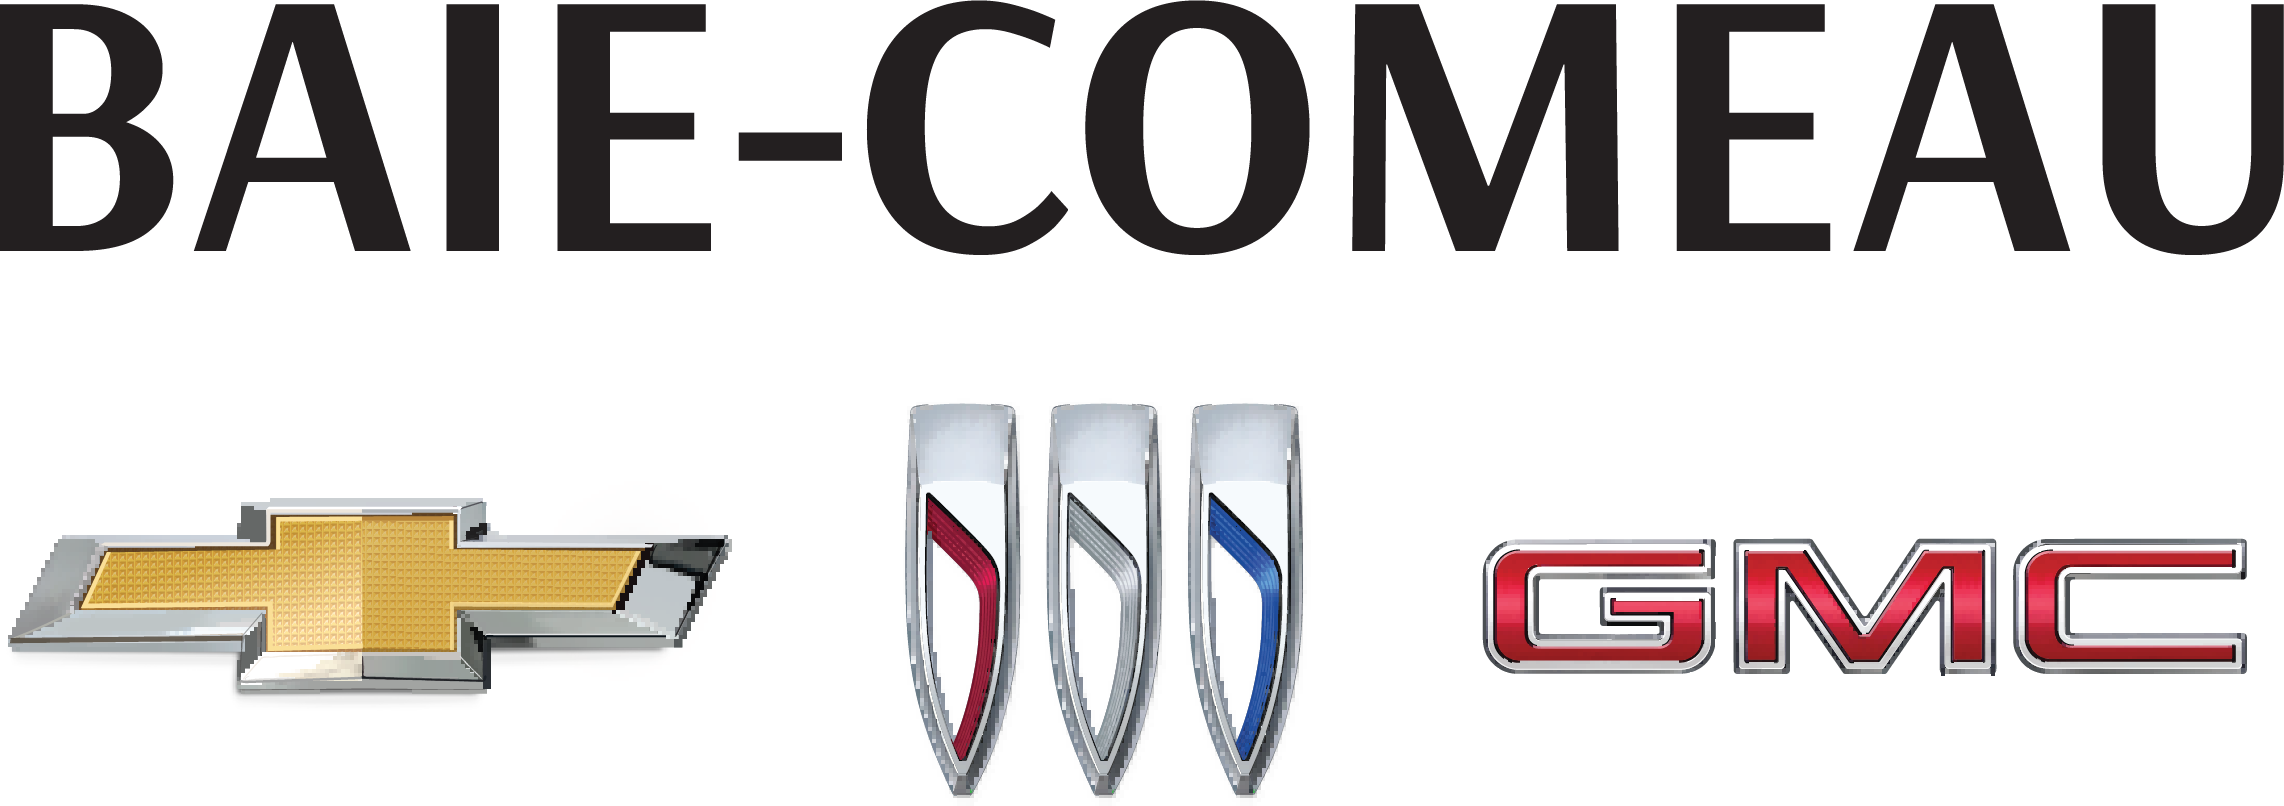 Baie Comeau Chevrolet Buick GMC Logo